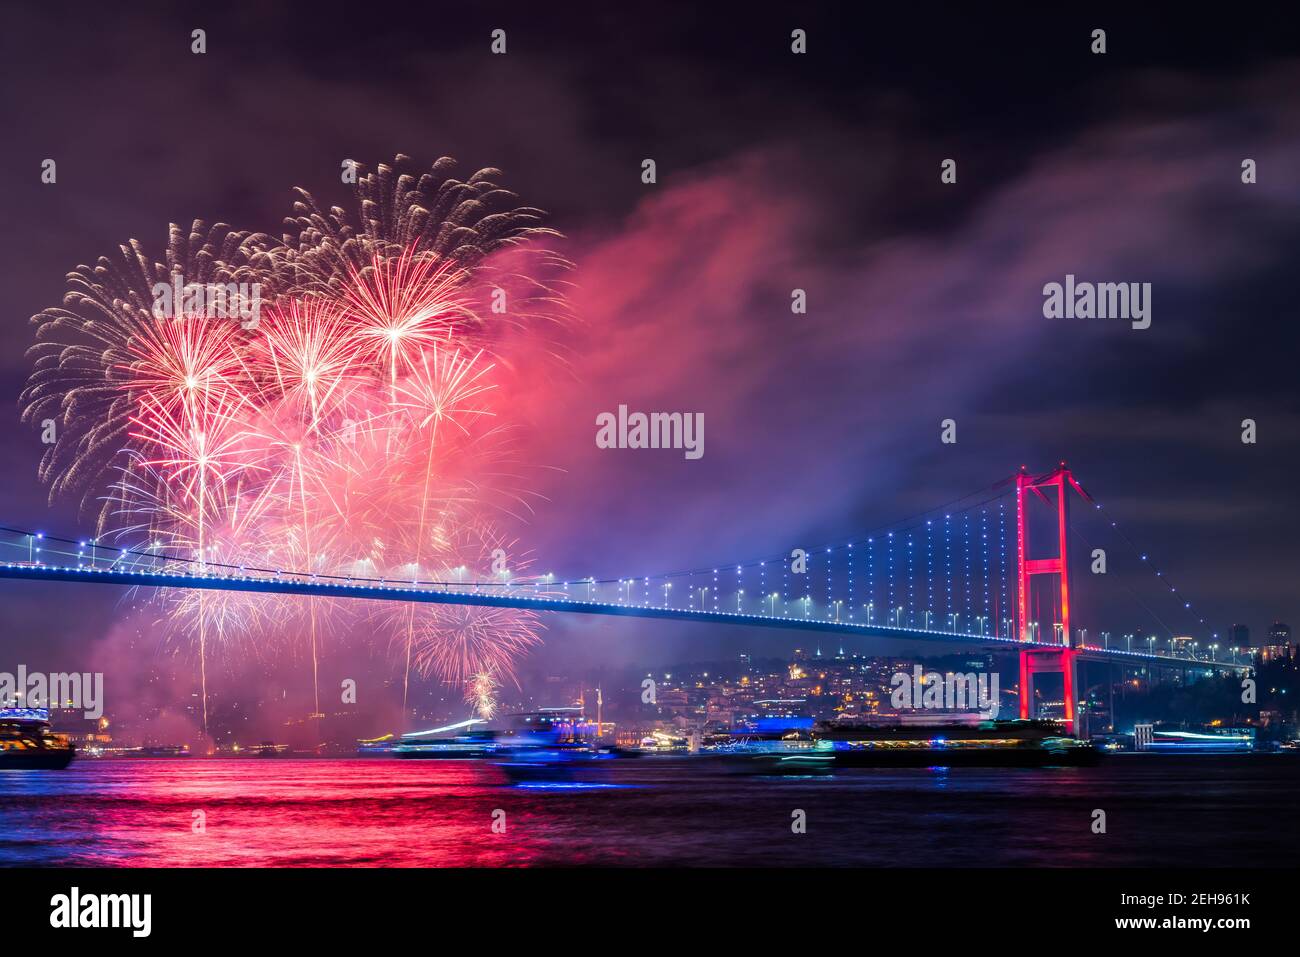 ISTANBUL, TURKEY. New Year 2020 Celebrations Around the Istanbul. Fireworks with Istanbul Bosphorus Bridge (15th July Martyrs Bridge). Stock Photo